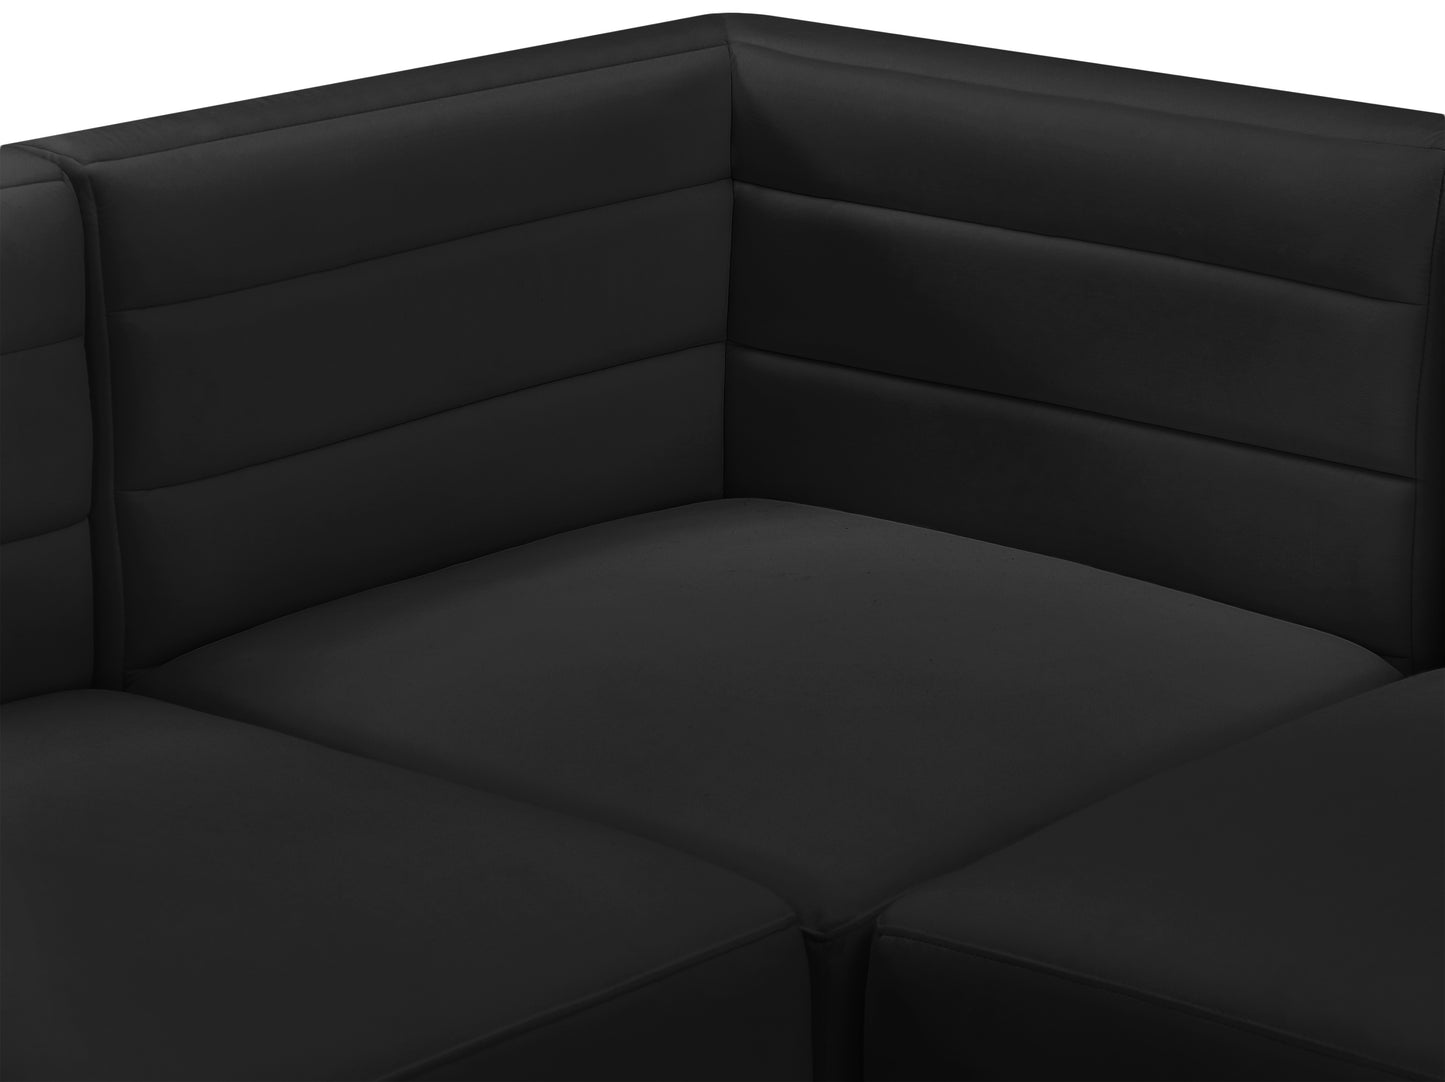 amelia black velvet modular sectional sec5a